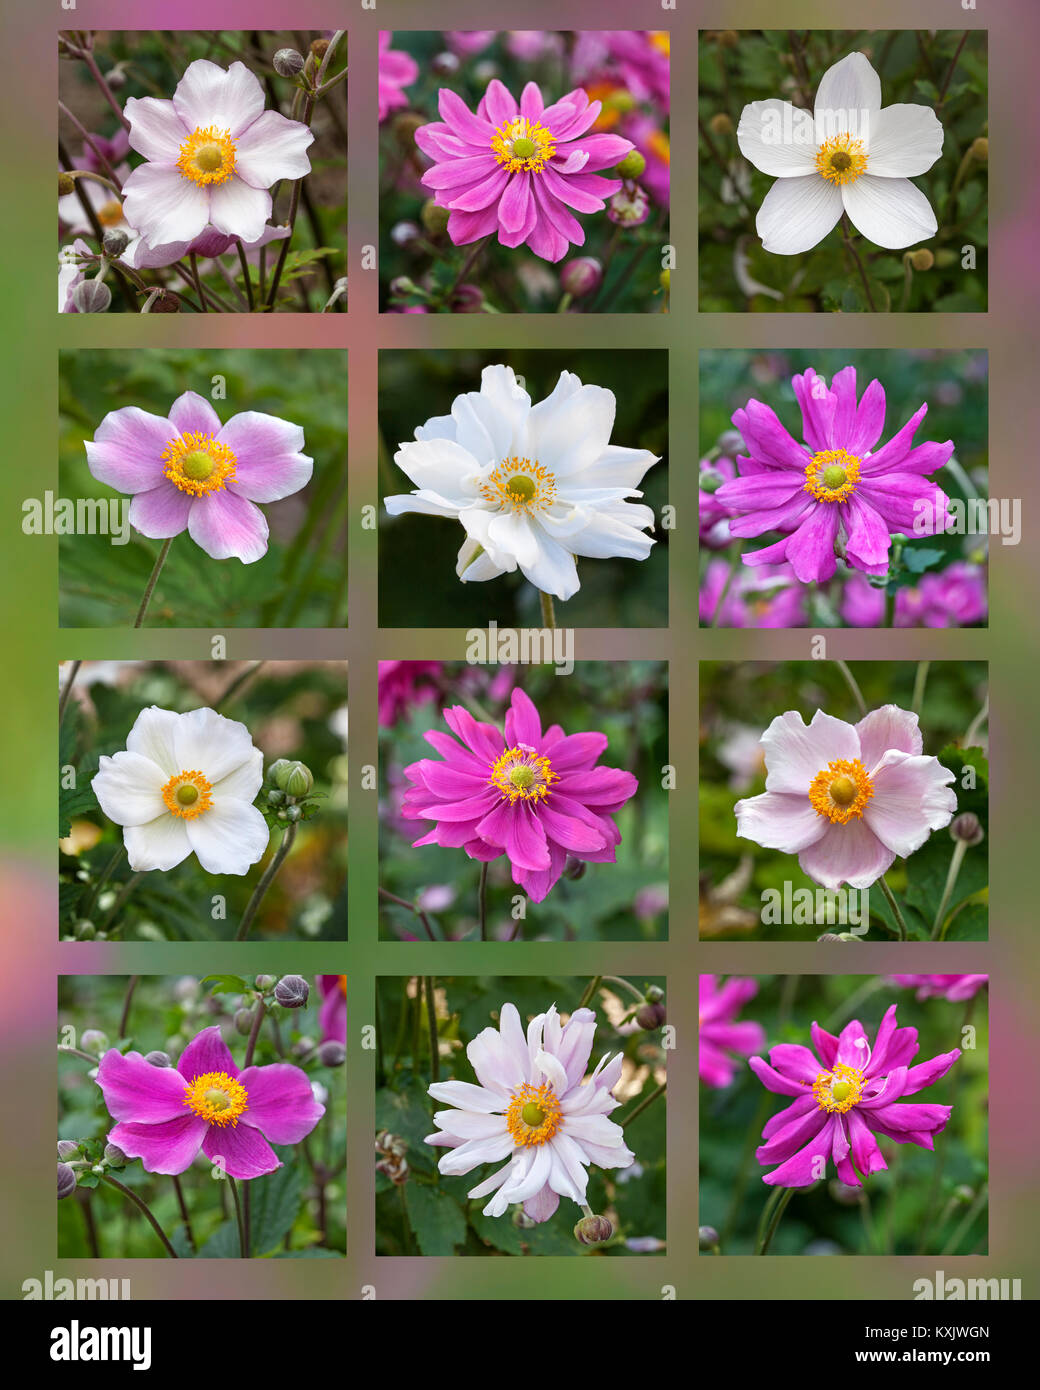 Japanese anemone collage - Flowewr collage Stock Photo